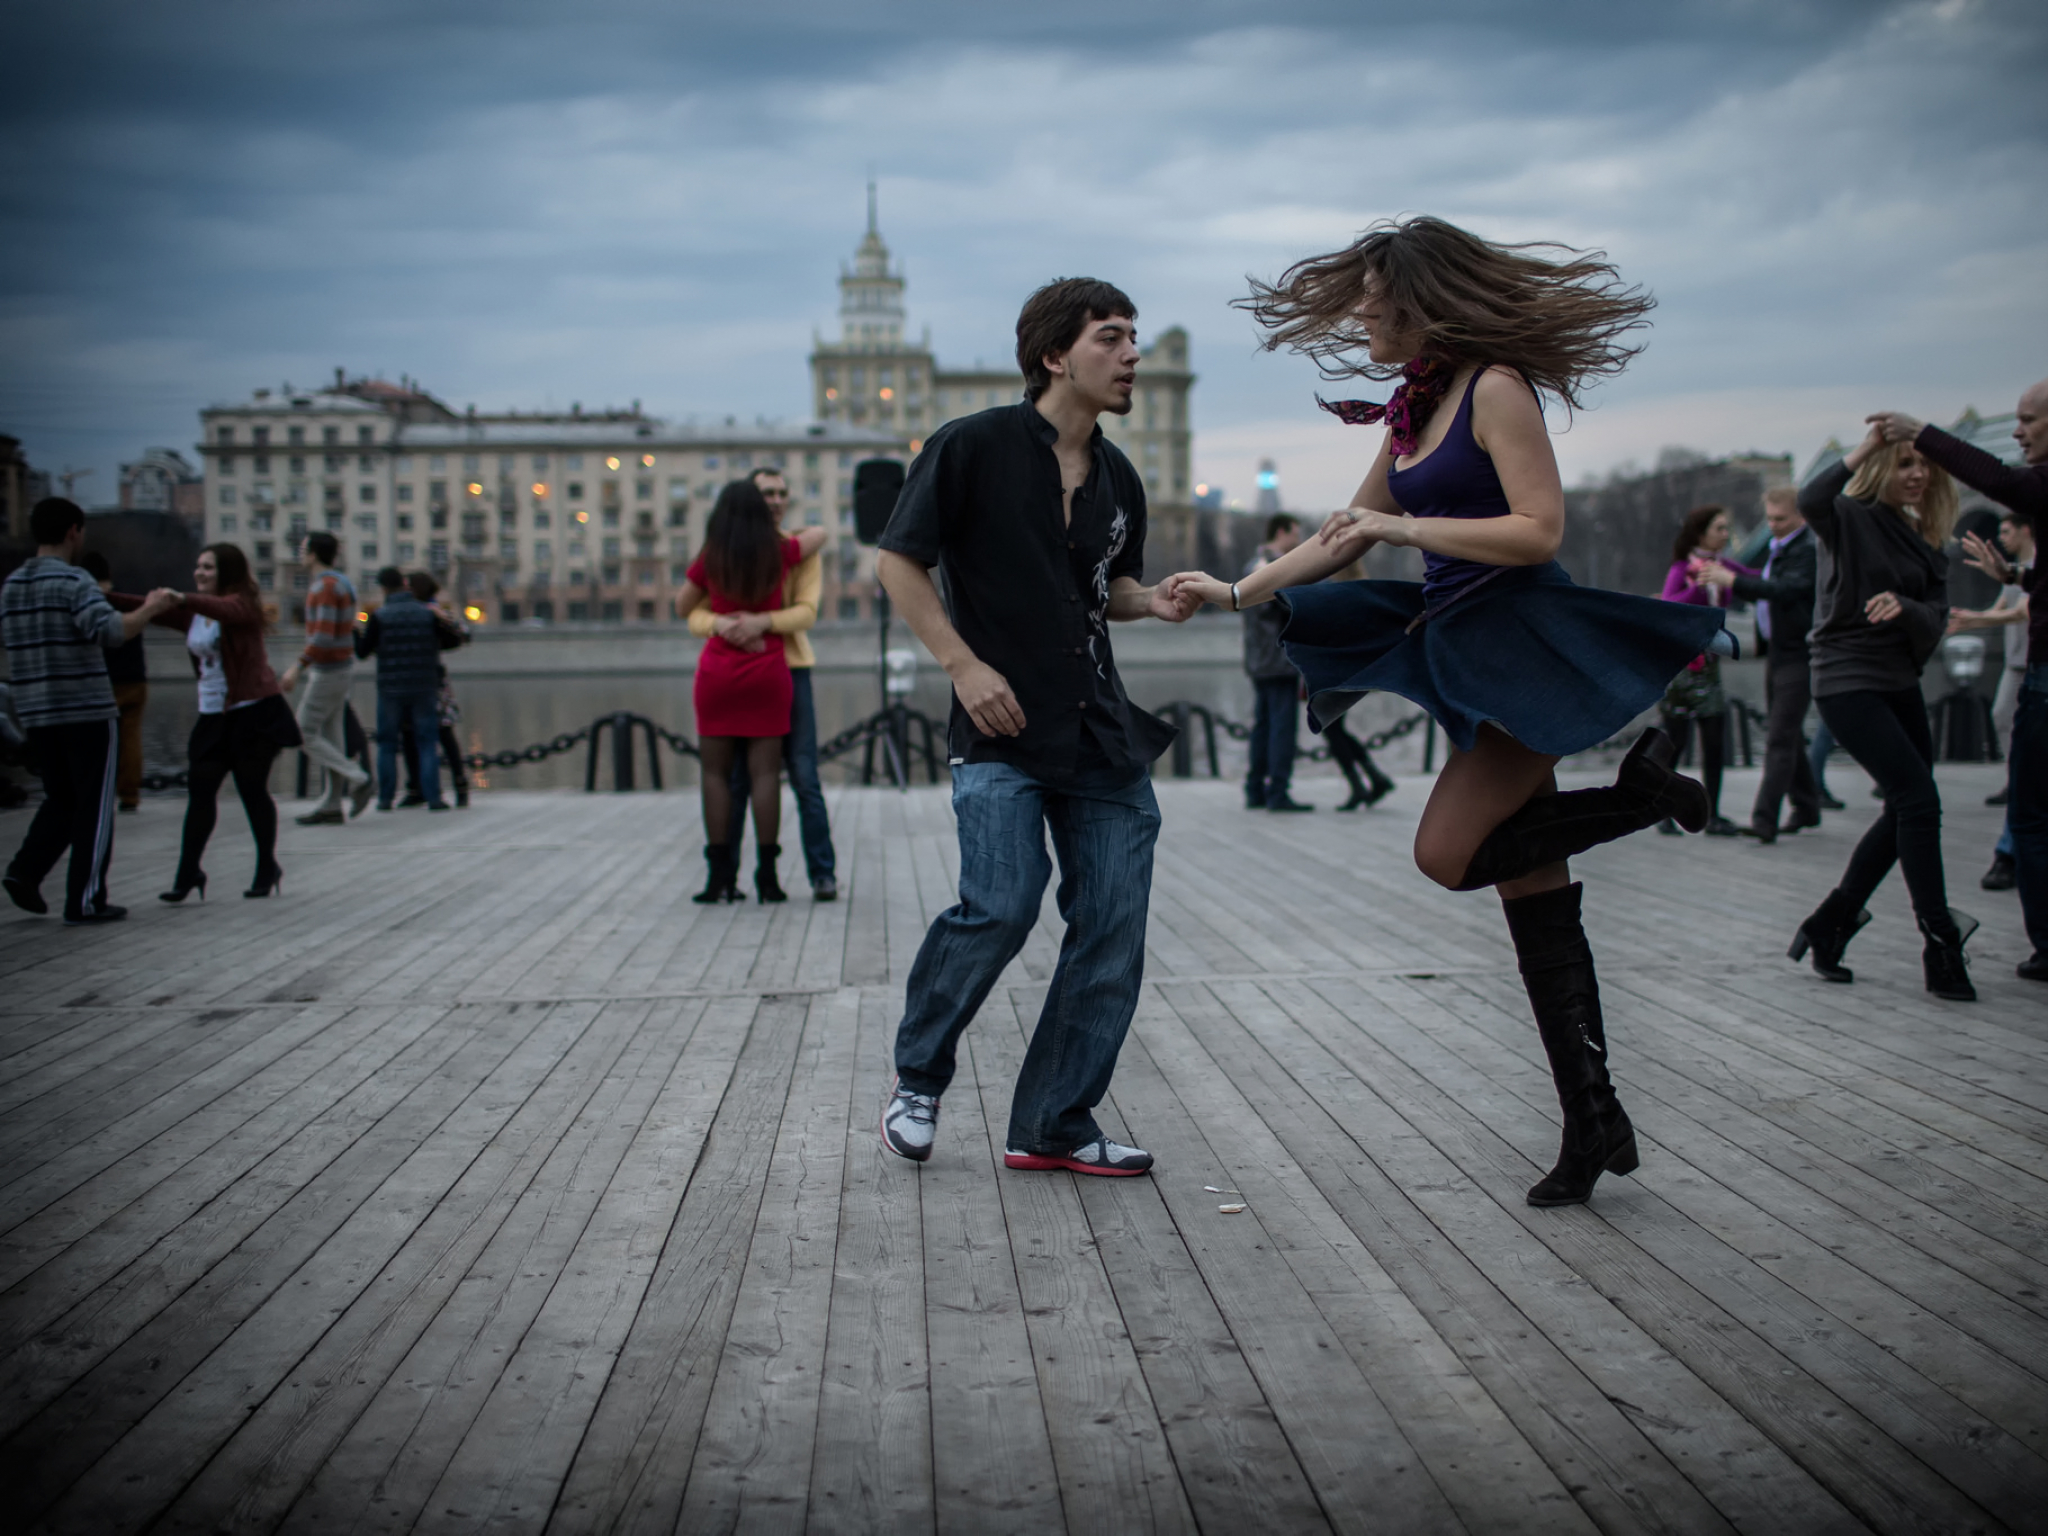 Москва танцуй казань танцуй екб танцуй текст. Люди танцуют. Танцы на улице. Парень и девушка танцуют. Танцующие люди на улице.